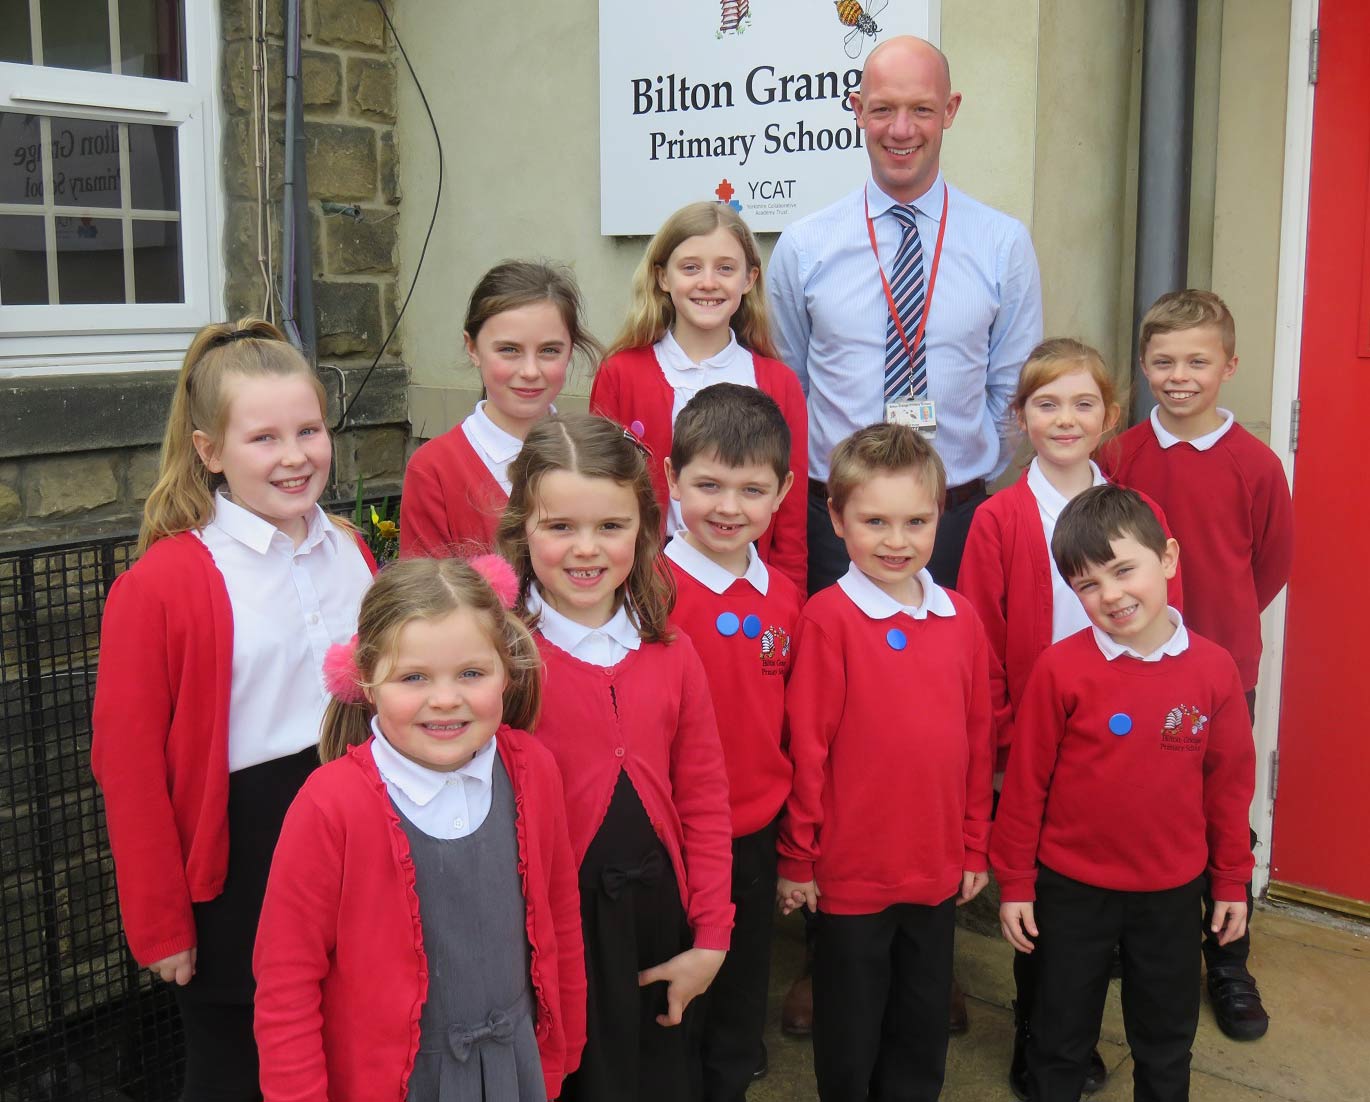 Deputy headteacher Richard Street with pupils from years 2 to 6 at Bilton Grange Primary School